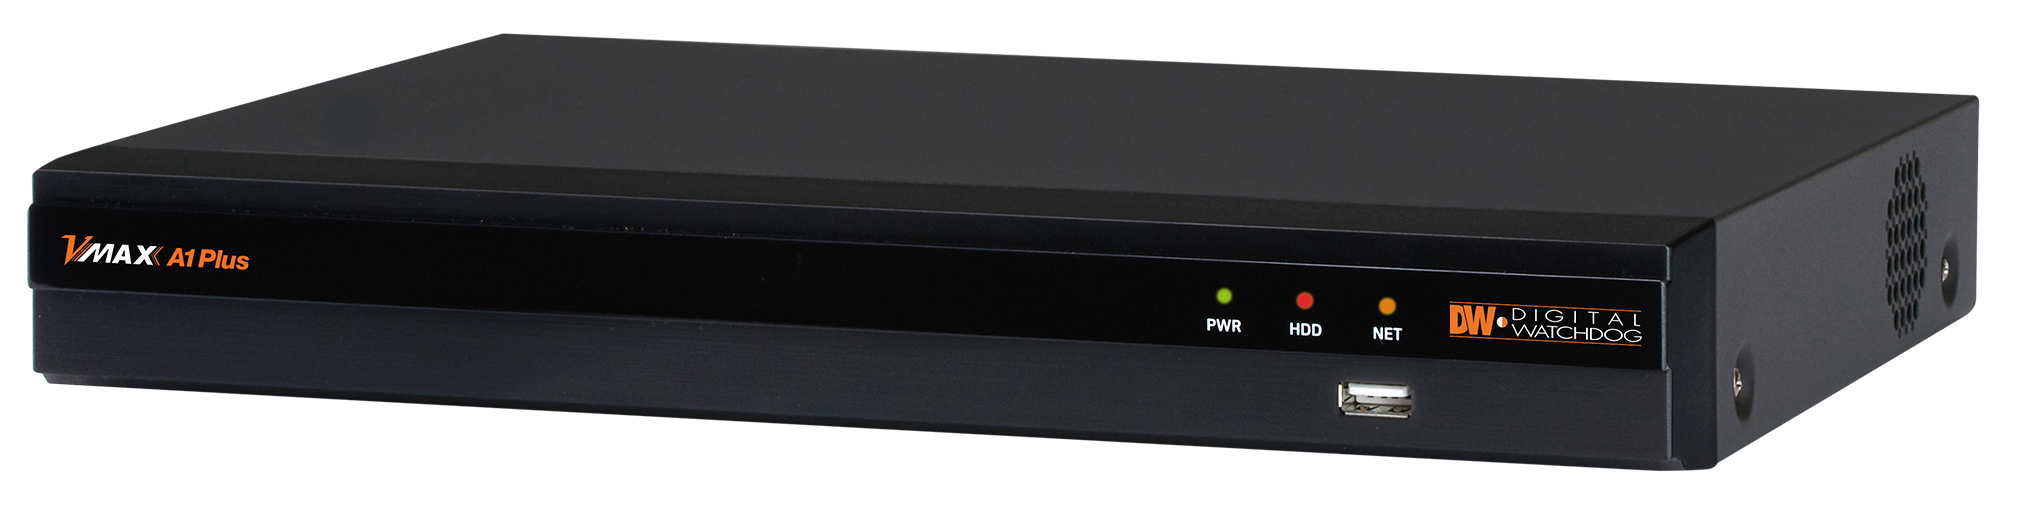 Digital Watchdog DW-VA1P416T  UHDoC - DVR 4ch 4 Channel Universal HD Over Coax DVR